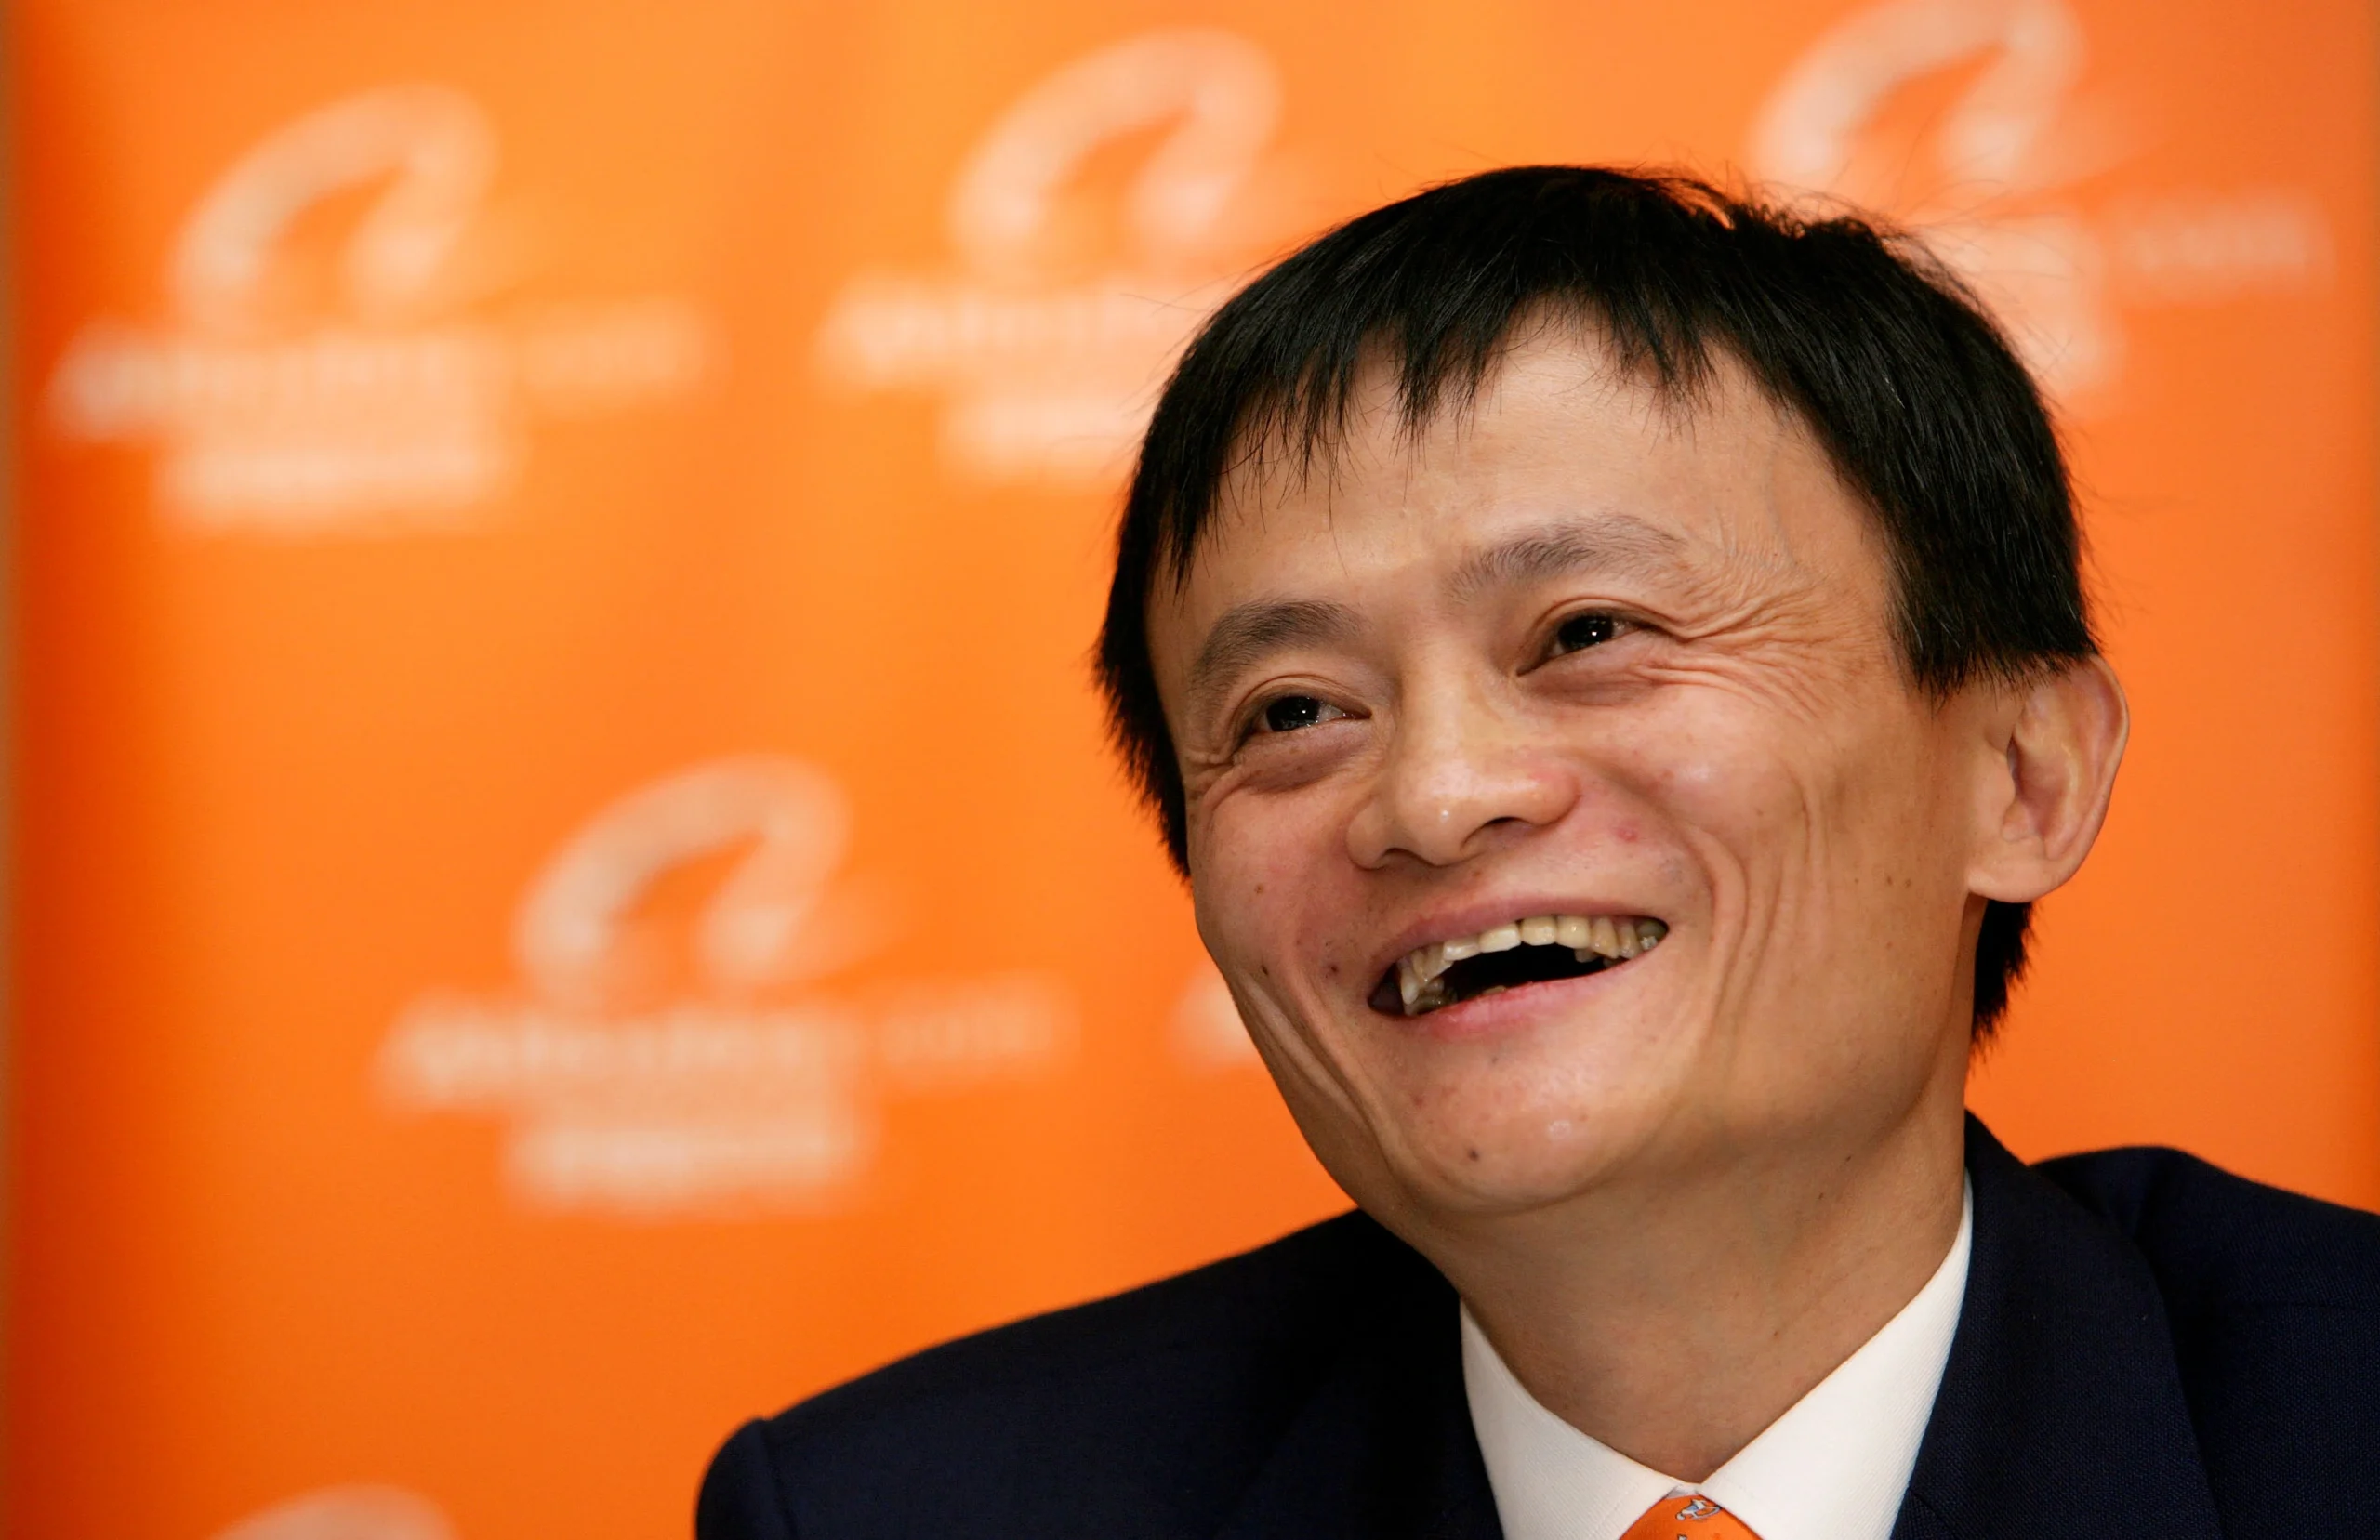 Alibaba's headquarters in Hangzhou, China, symbolizing Ma's entrepreneurial success.